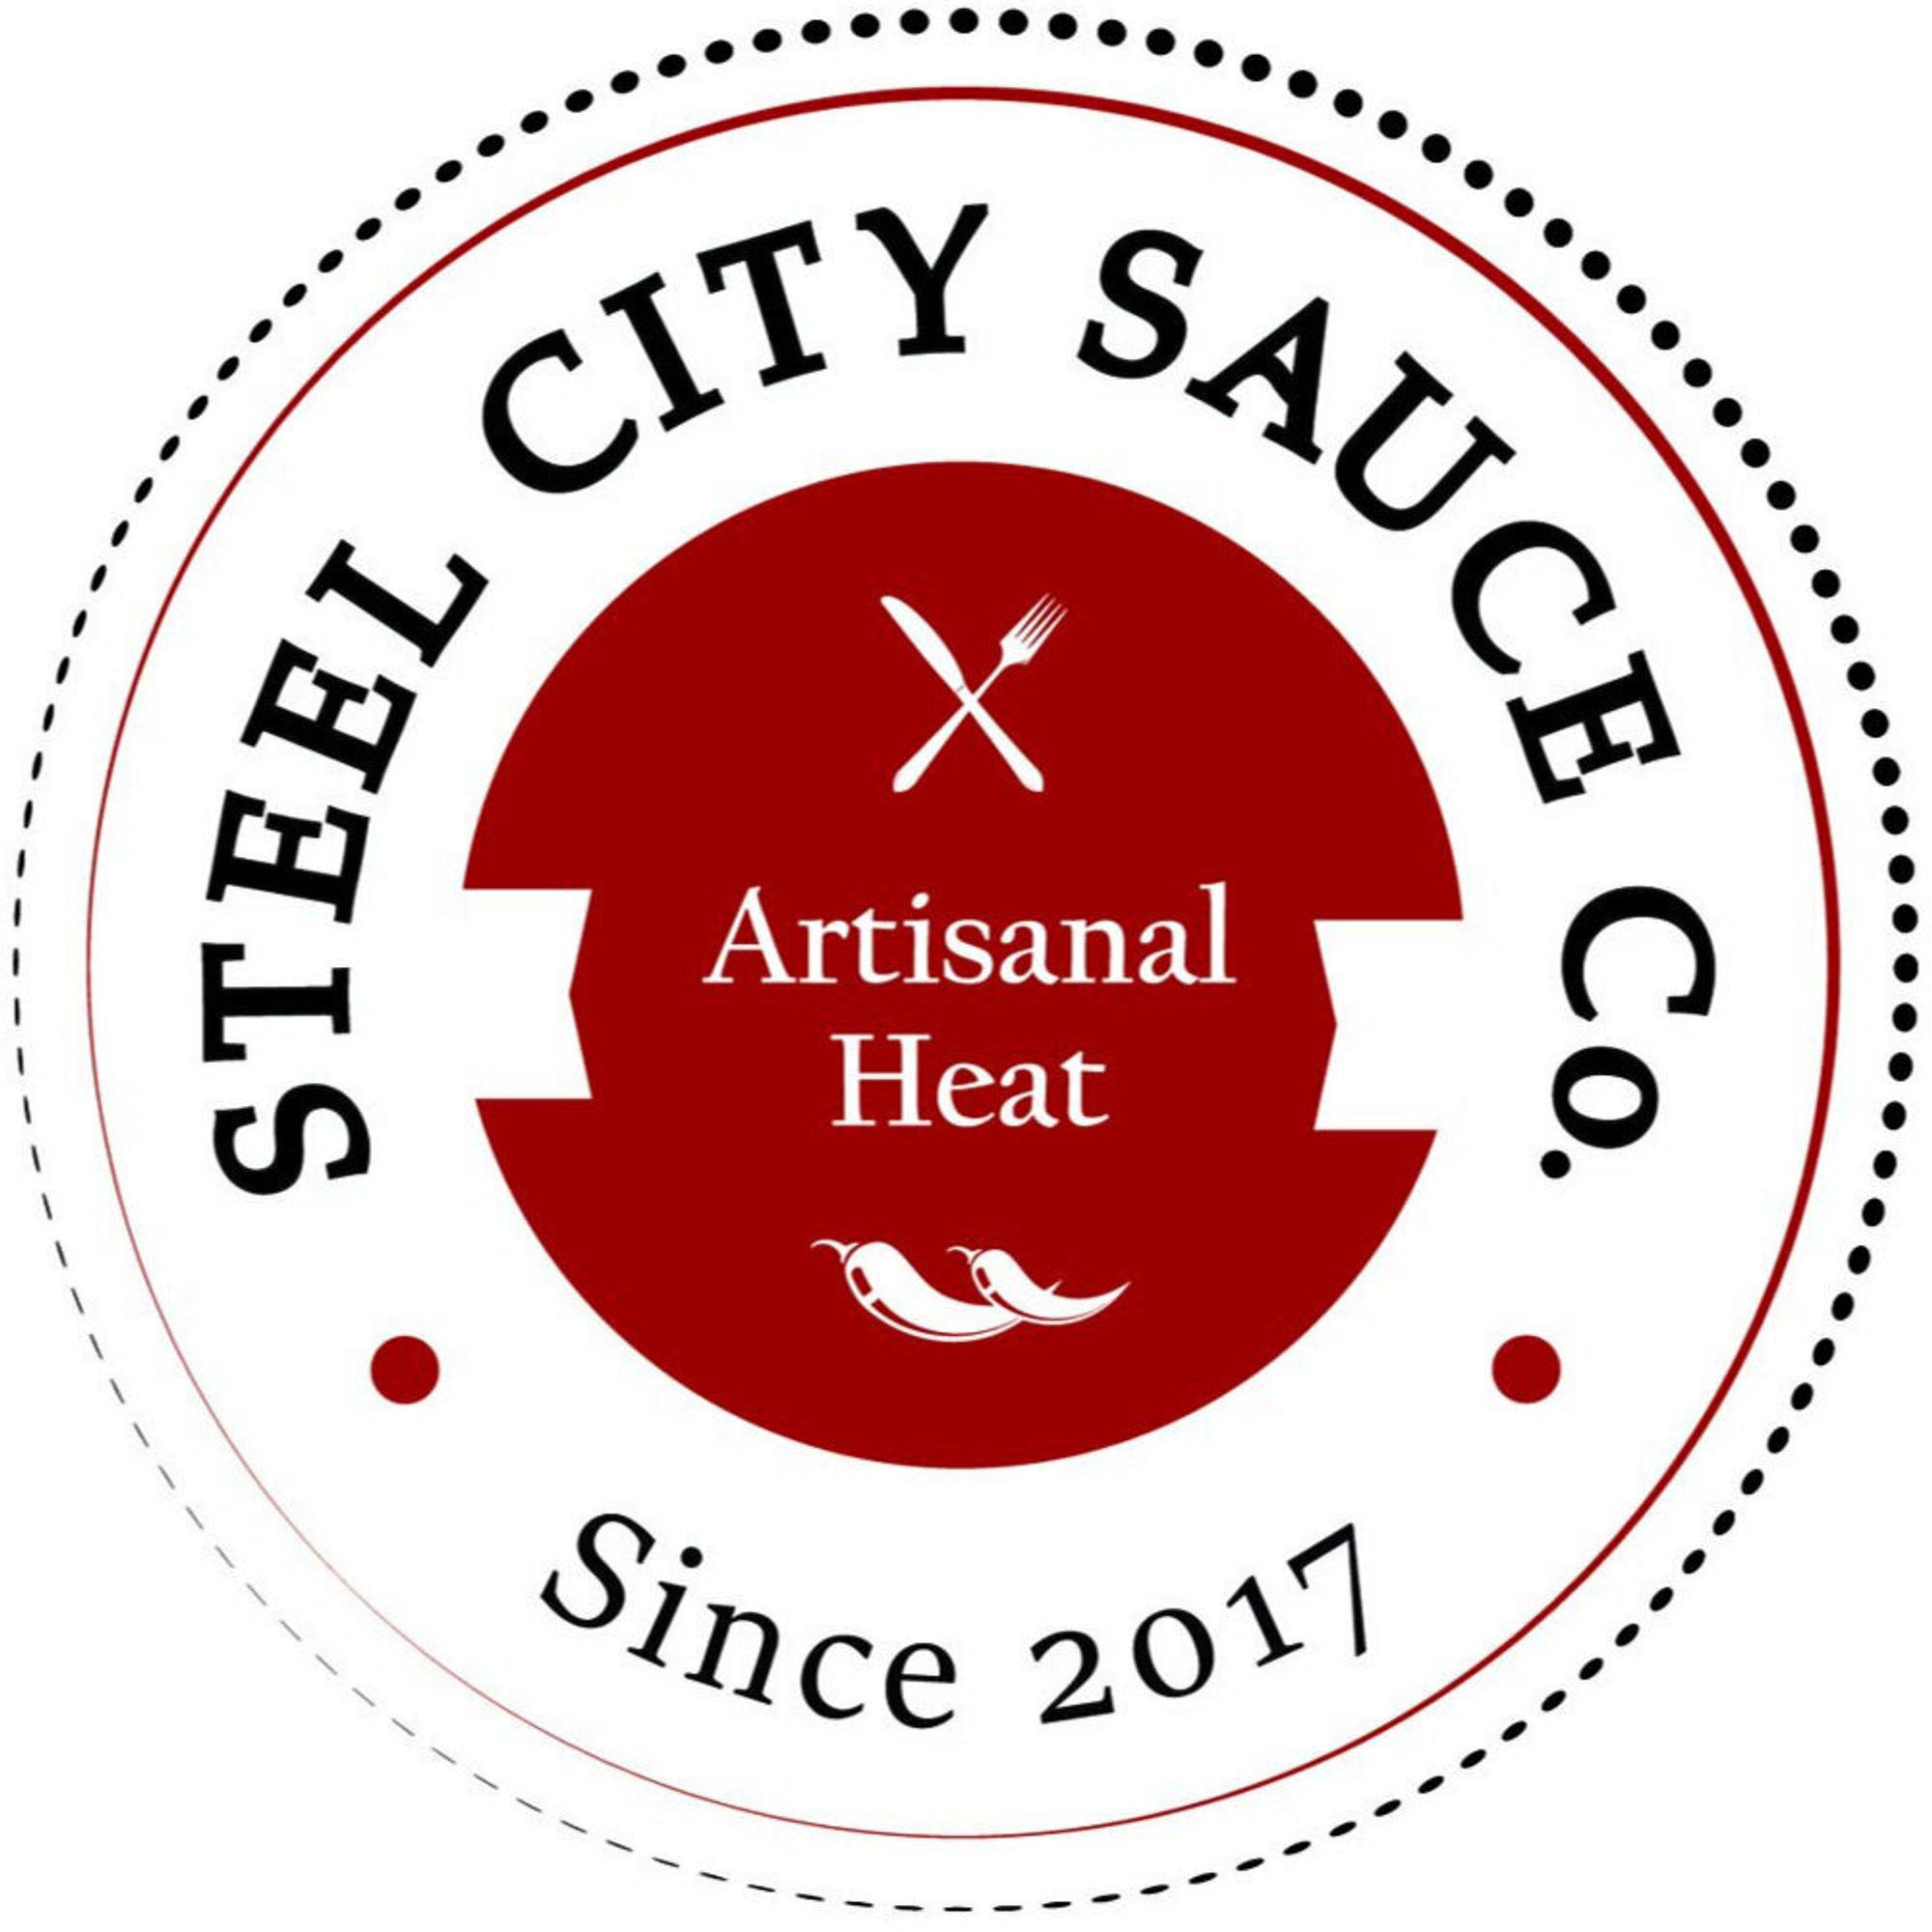 Steel City Sauce Co.